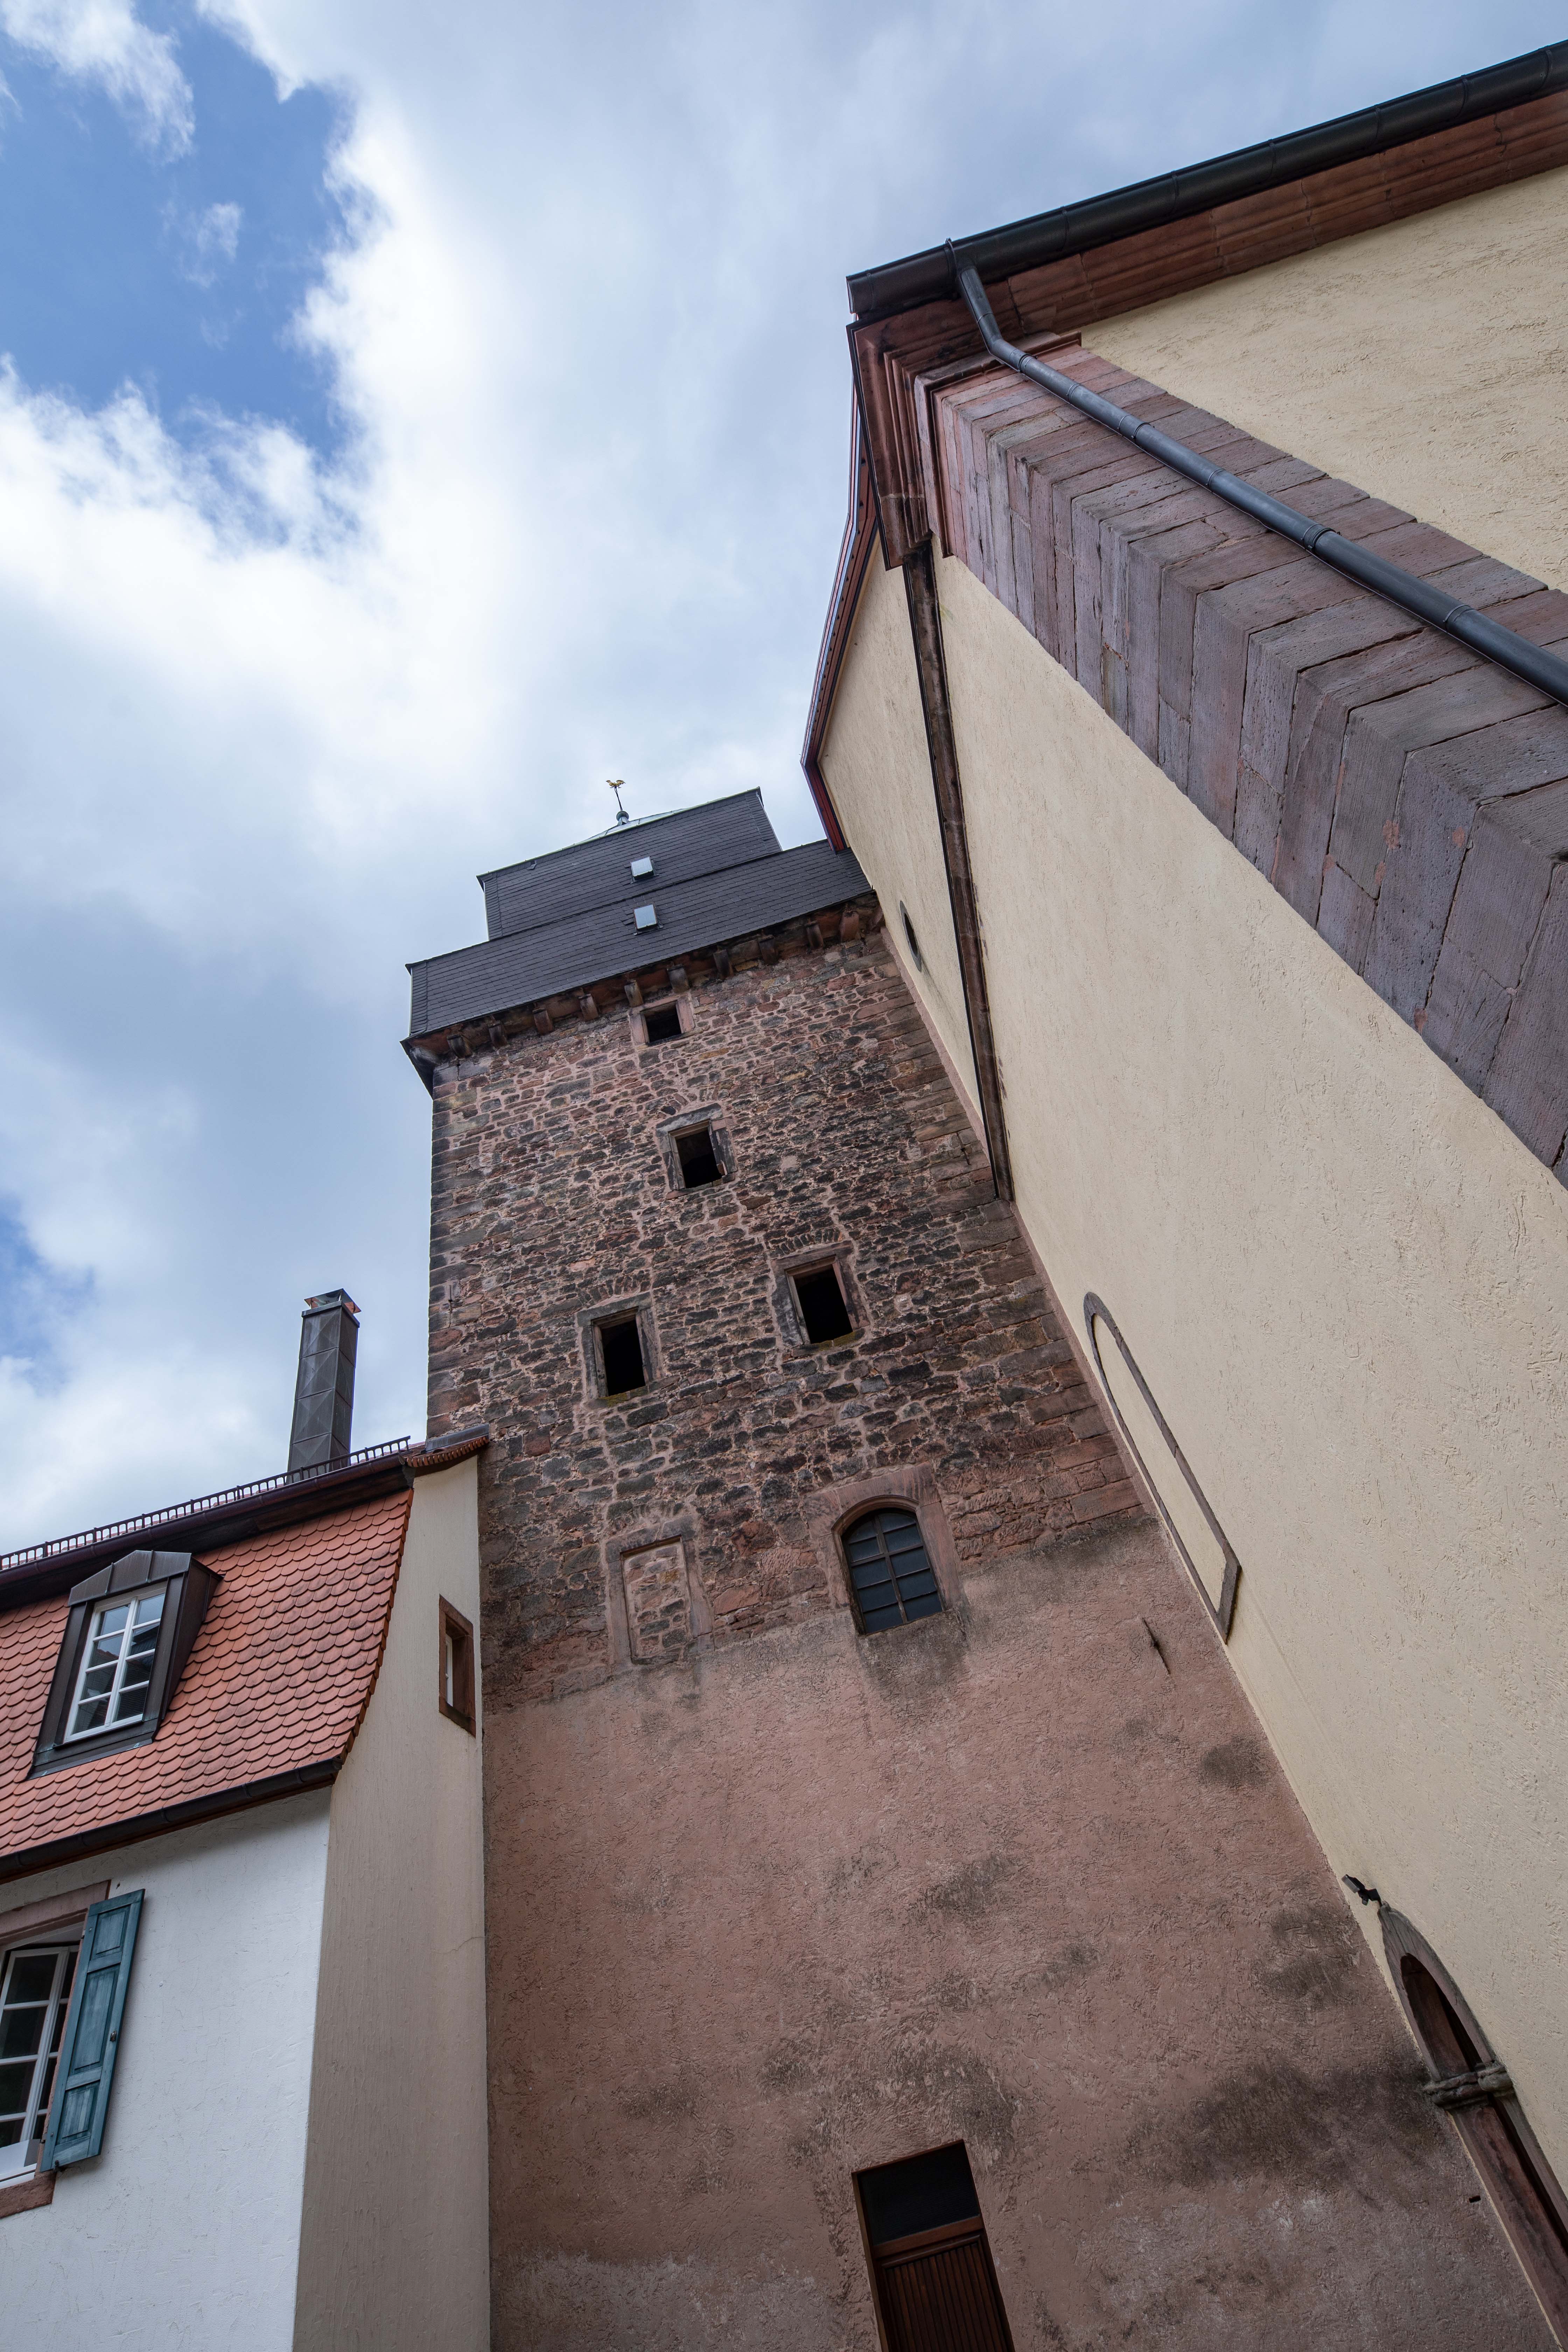 Turm der St. Andreas Kirche in Landstuhl